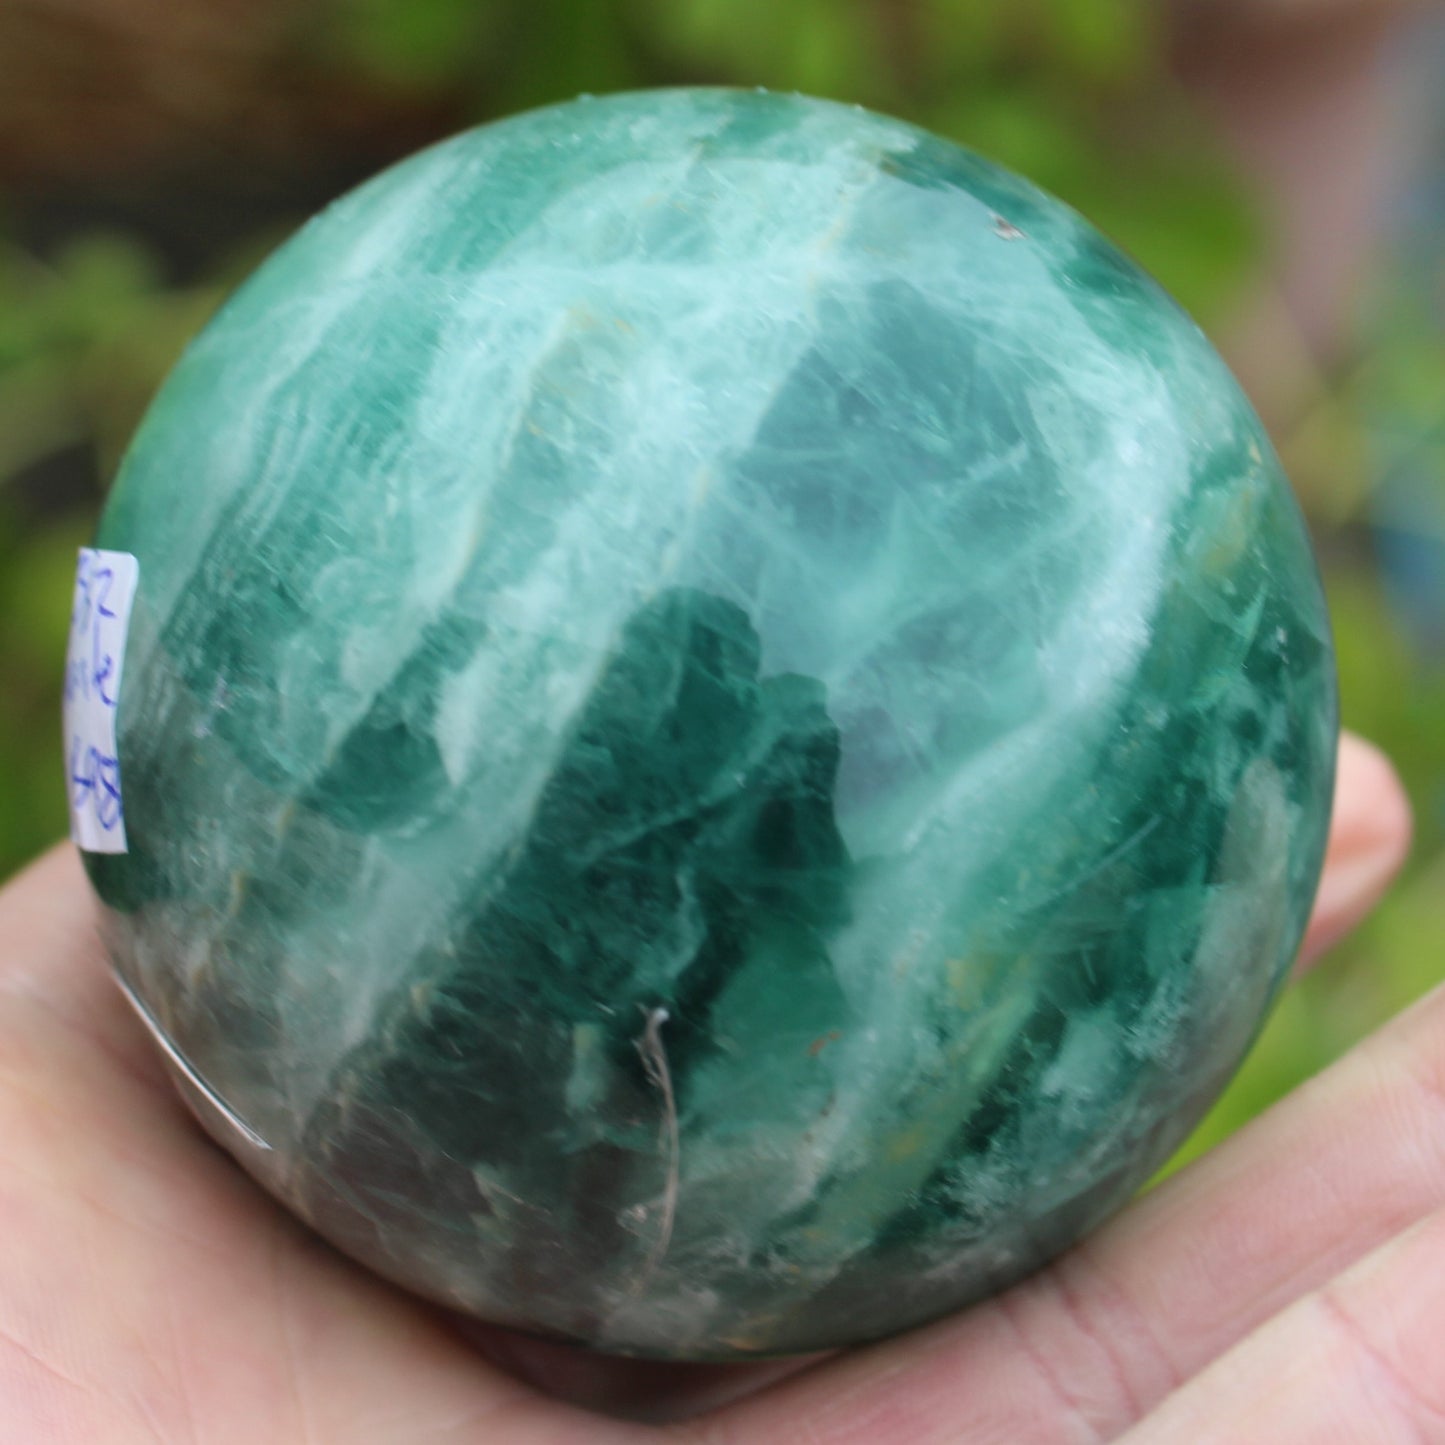 Green Fluorite sphere 606g